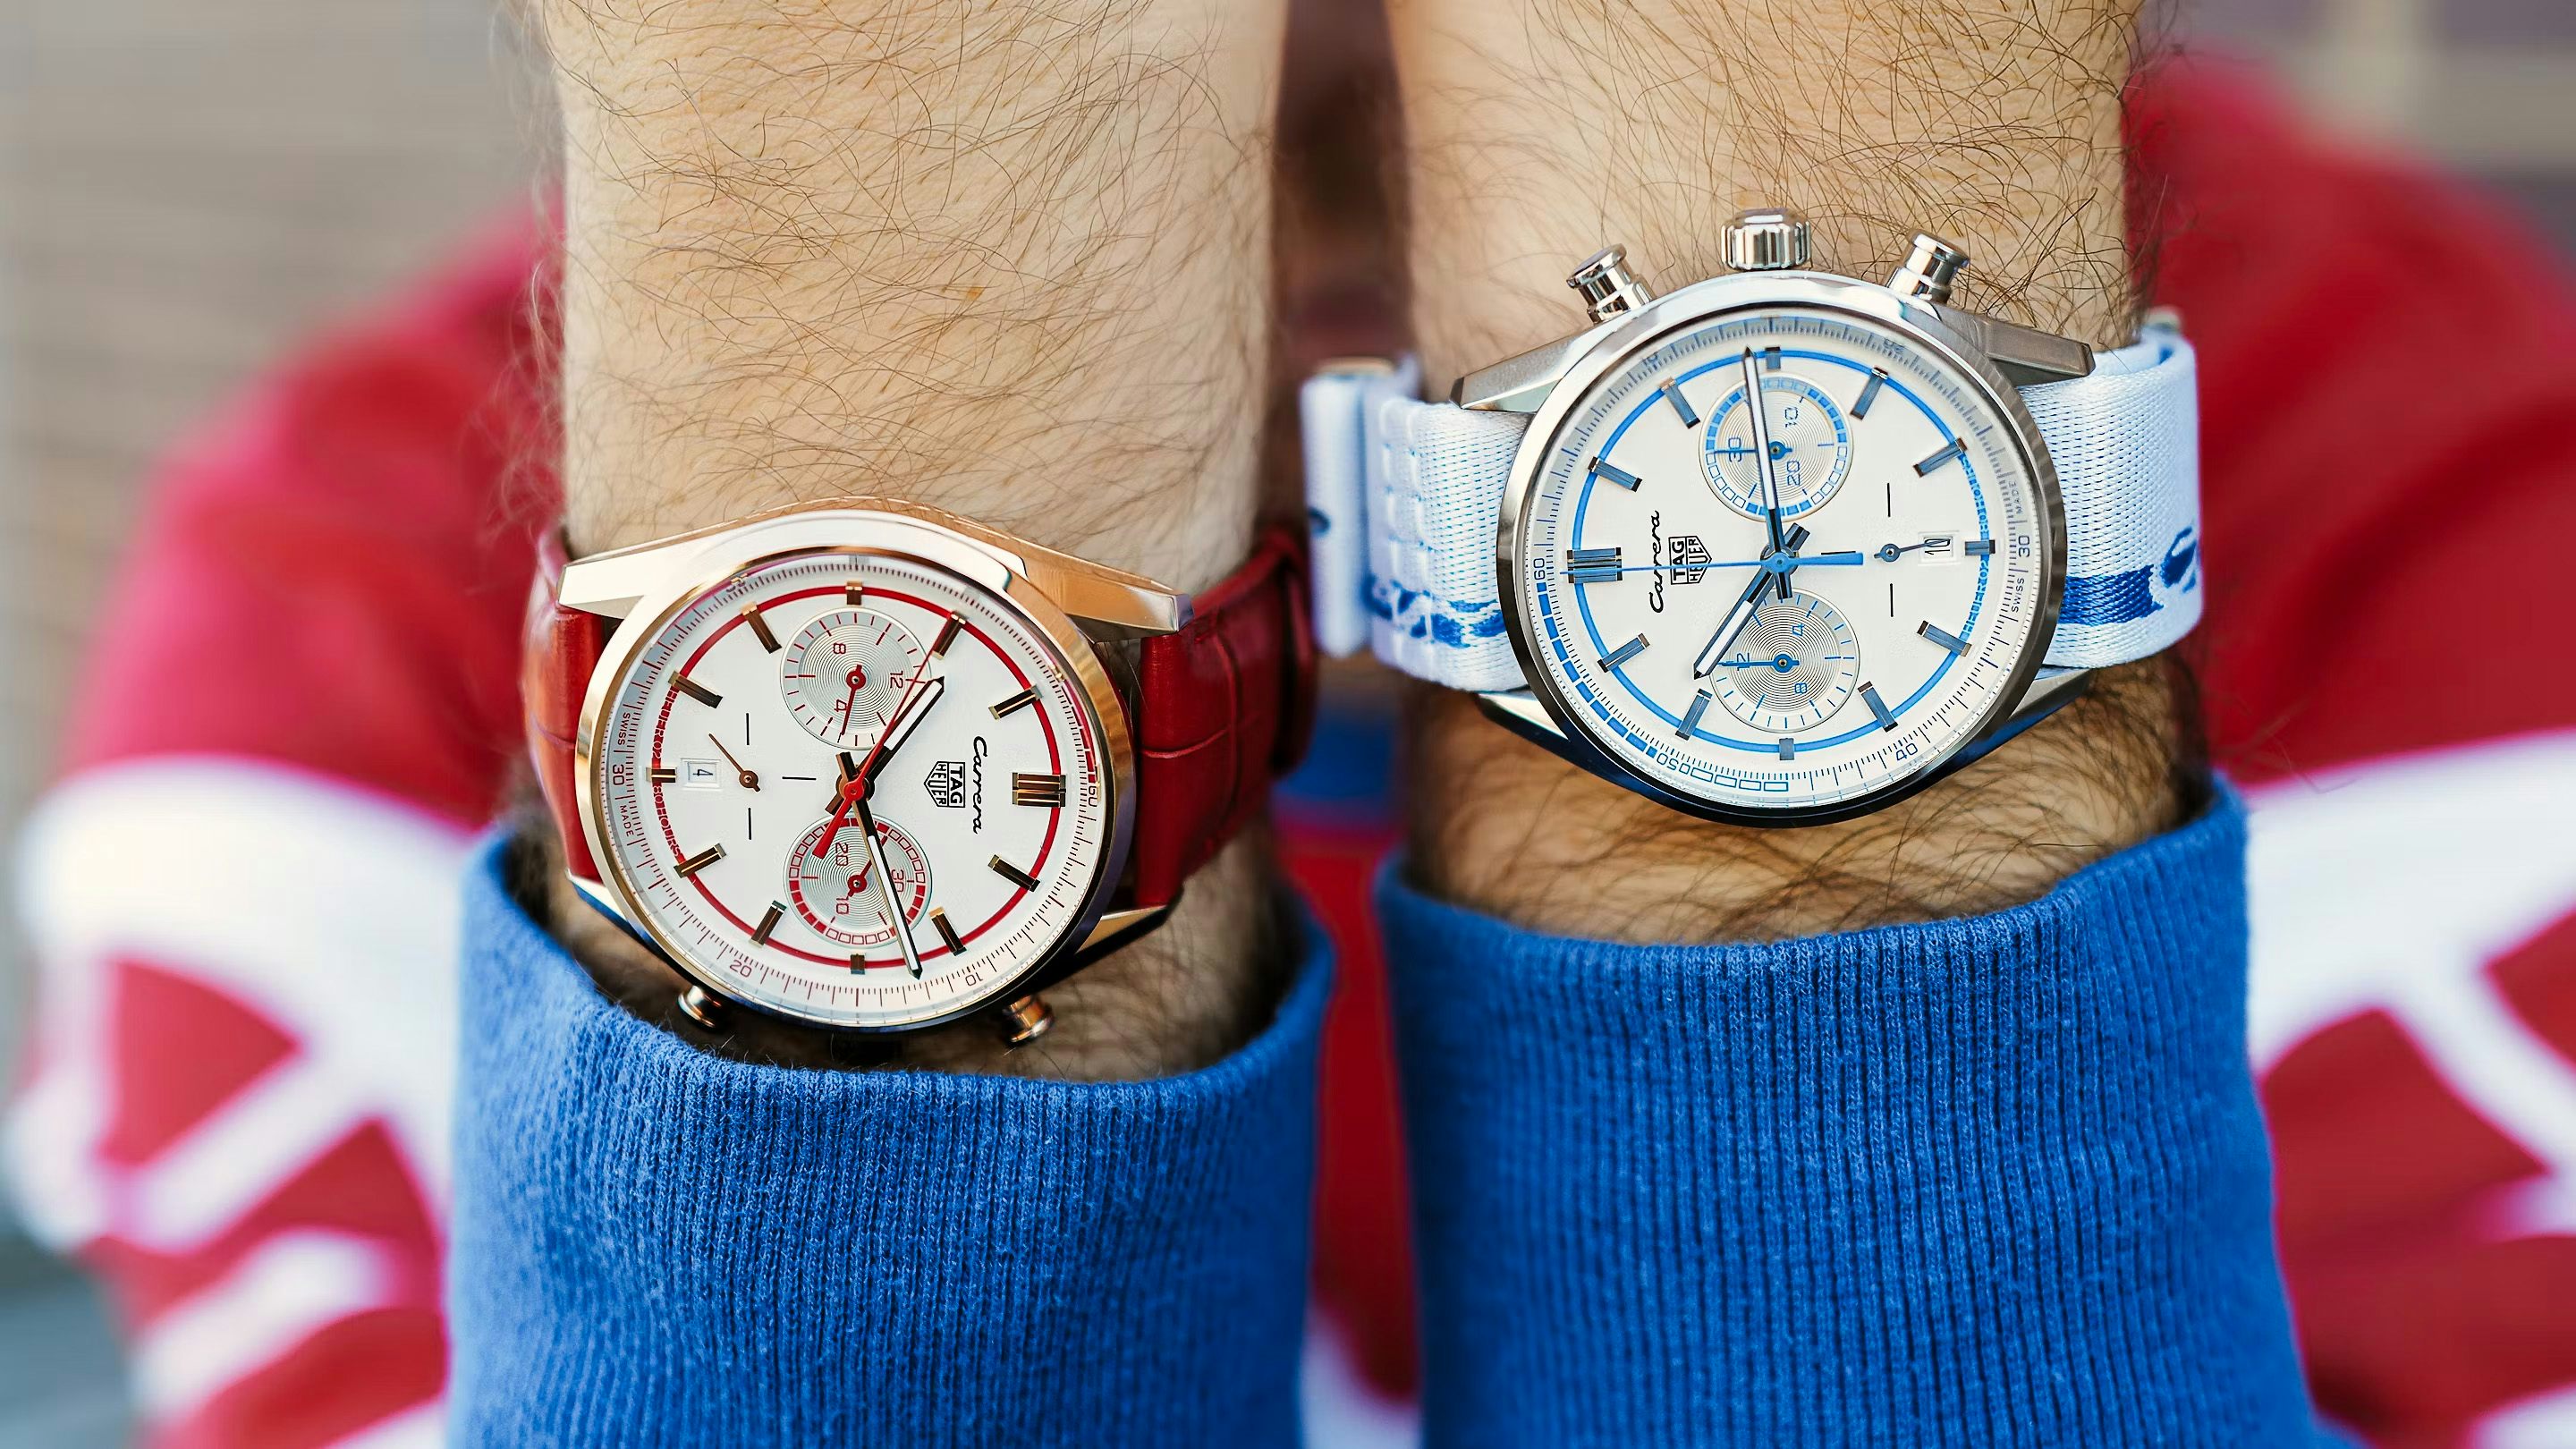 Tag Heuer Carrera x Porsche Automatic Chronograph Watches